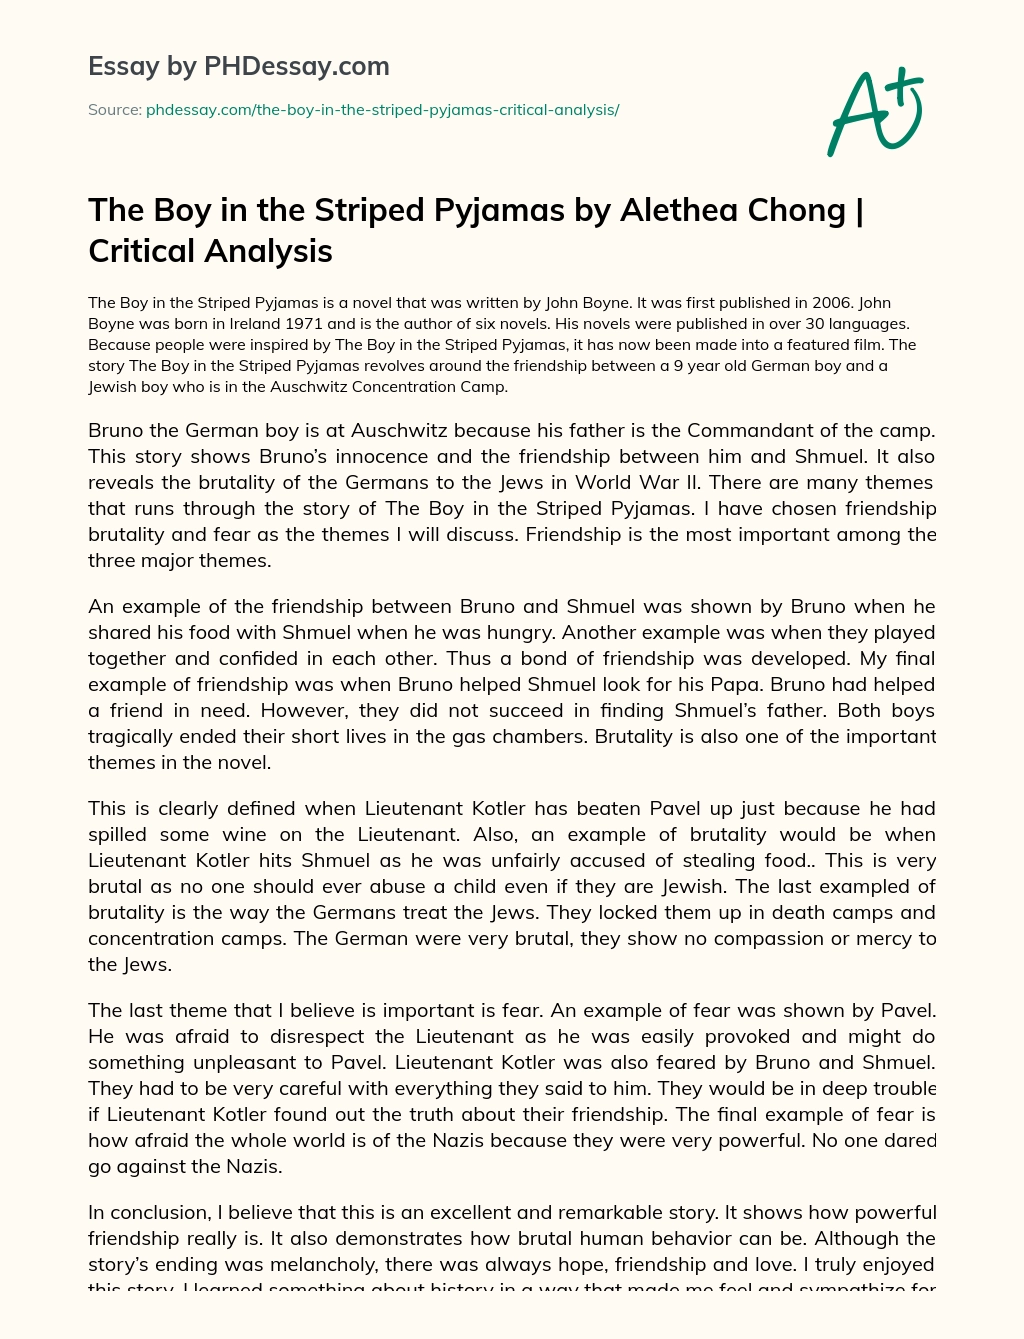 Nautisch lijden Klein The Boy In The Striped Pyjamas By Alethea Chong | Critical Analysis Essay  Example (600 Words) - PHDessay.com